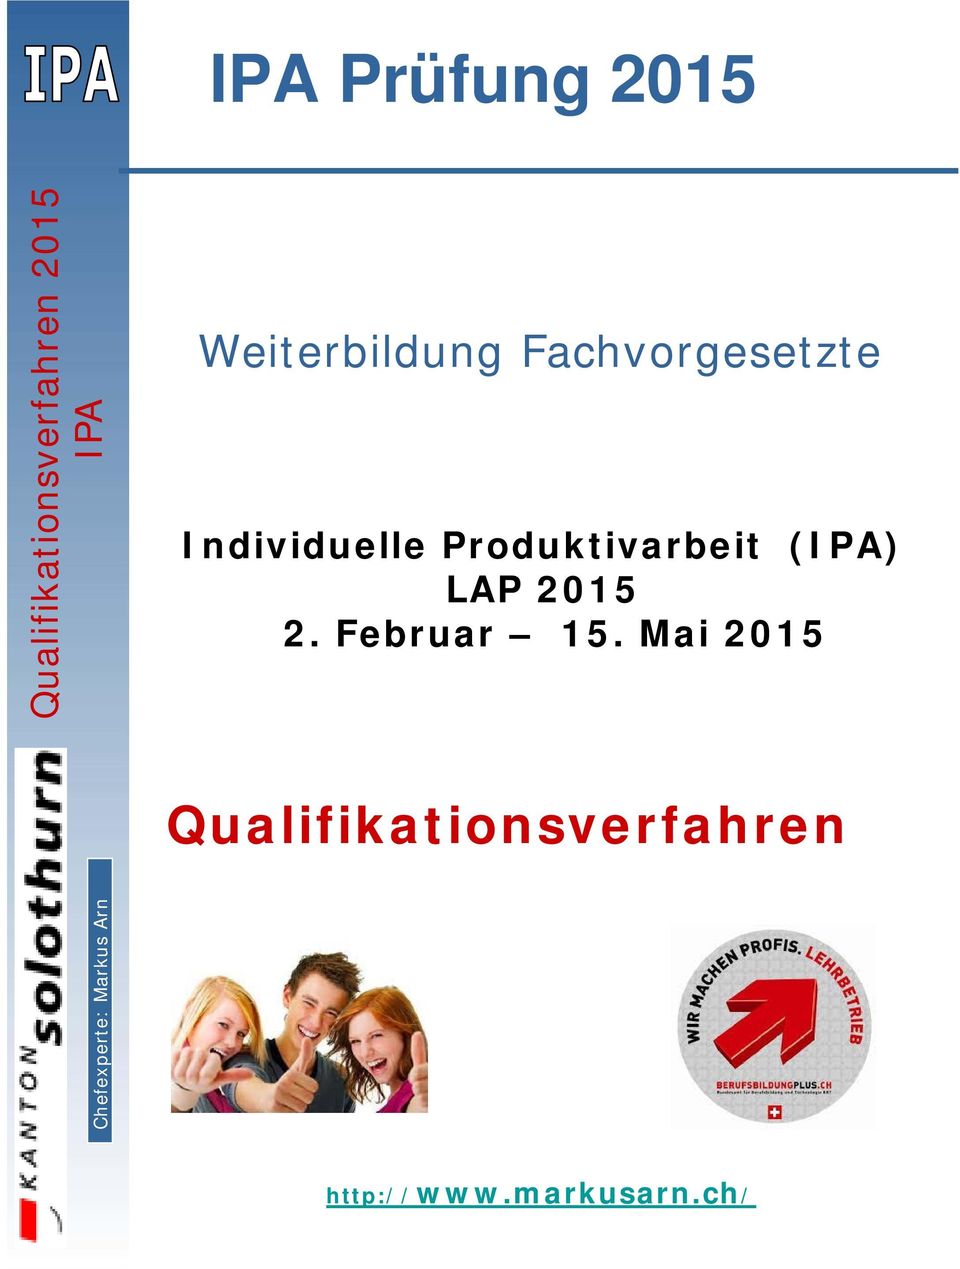 Produktivarbeit () LAP 2015 2.